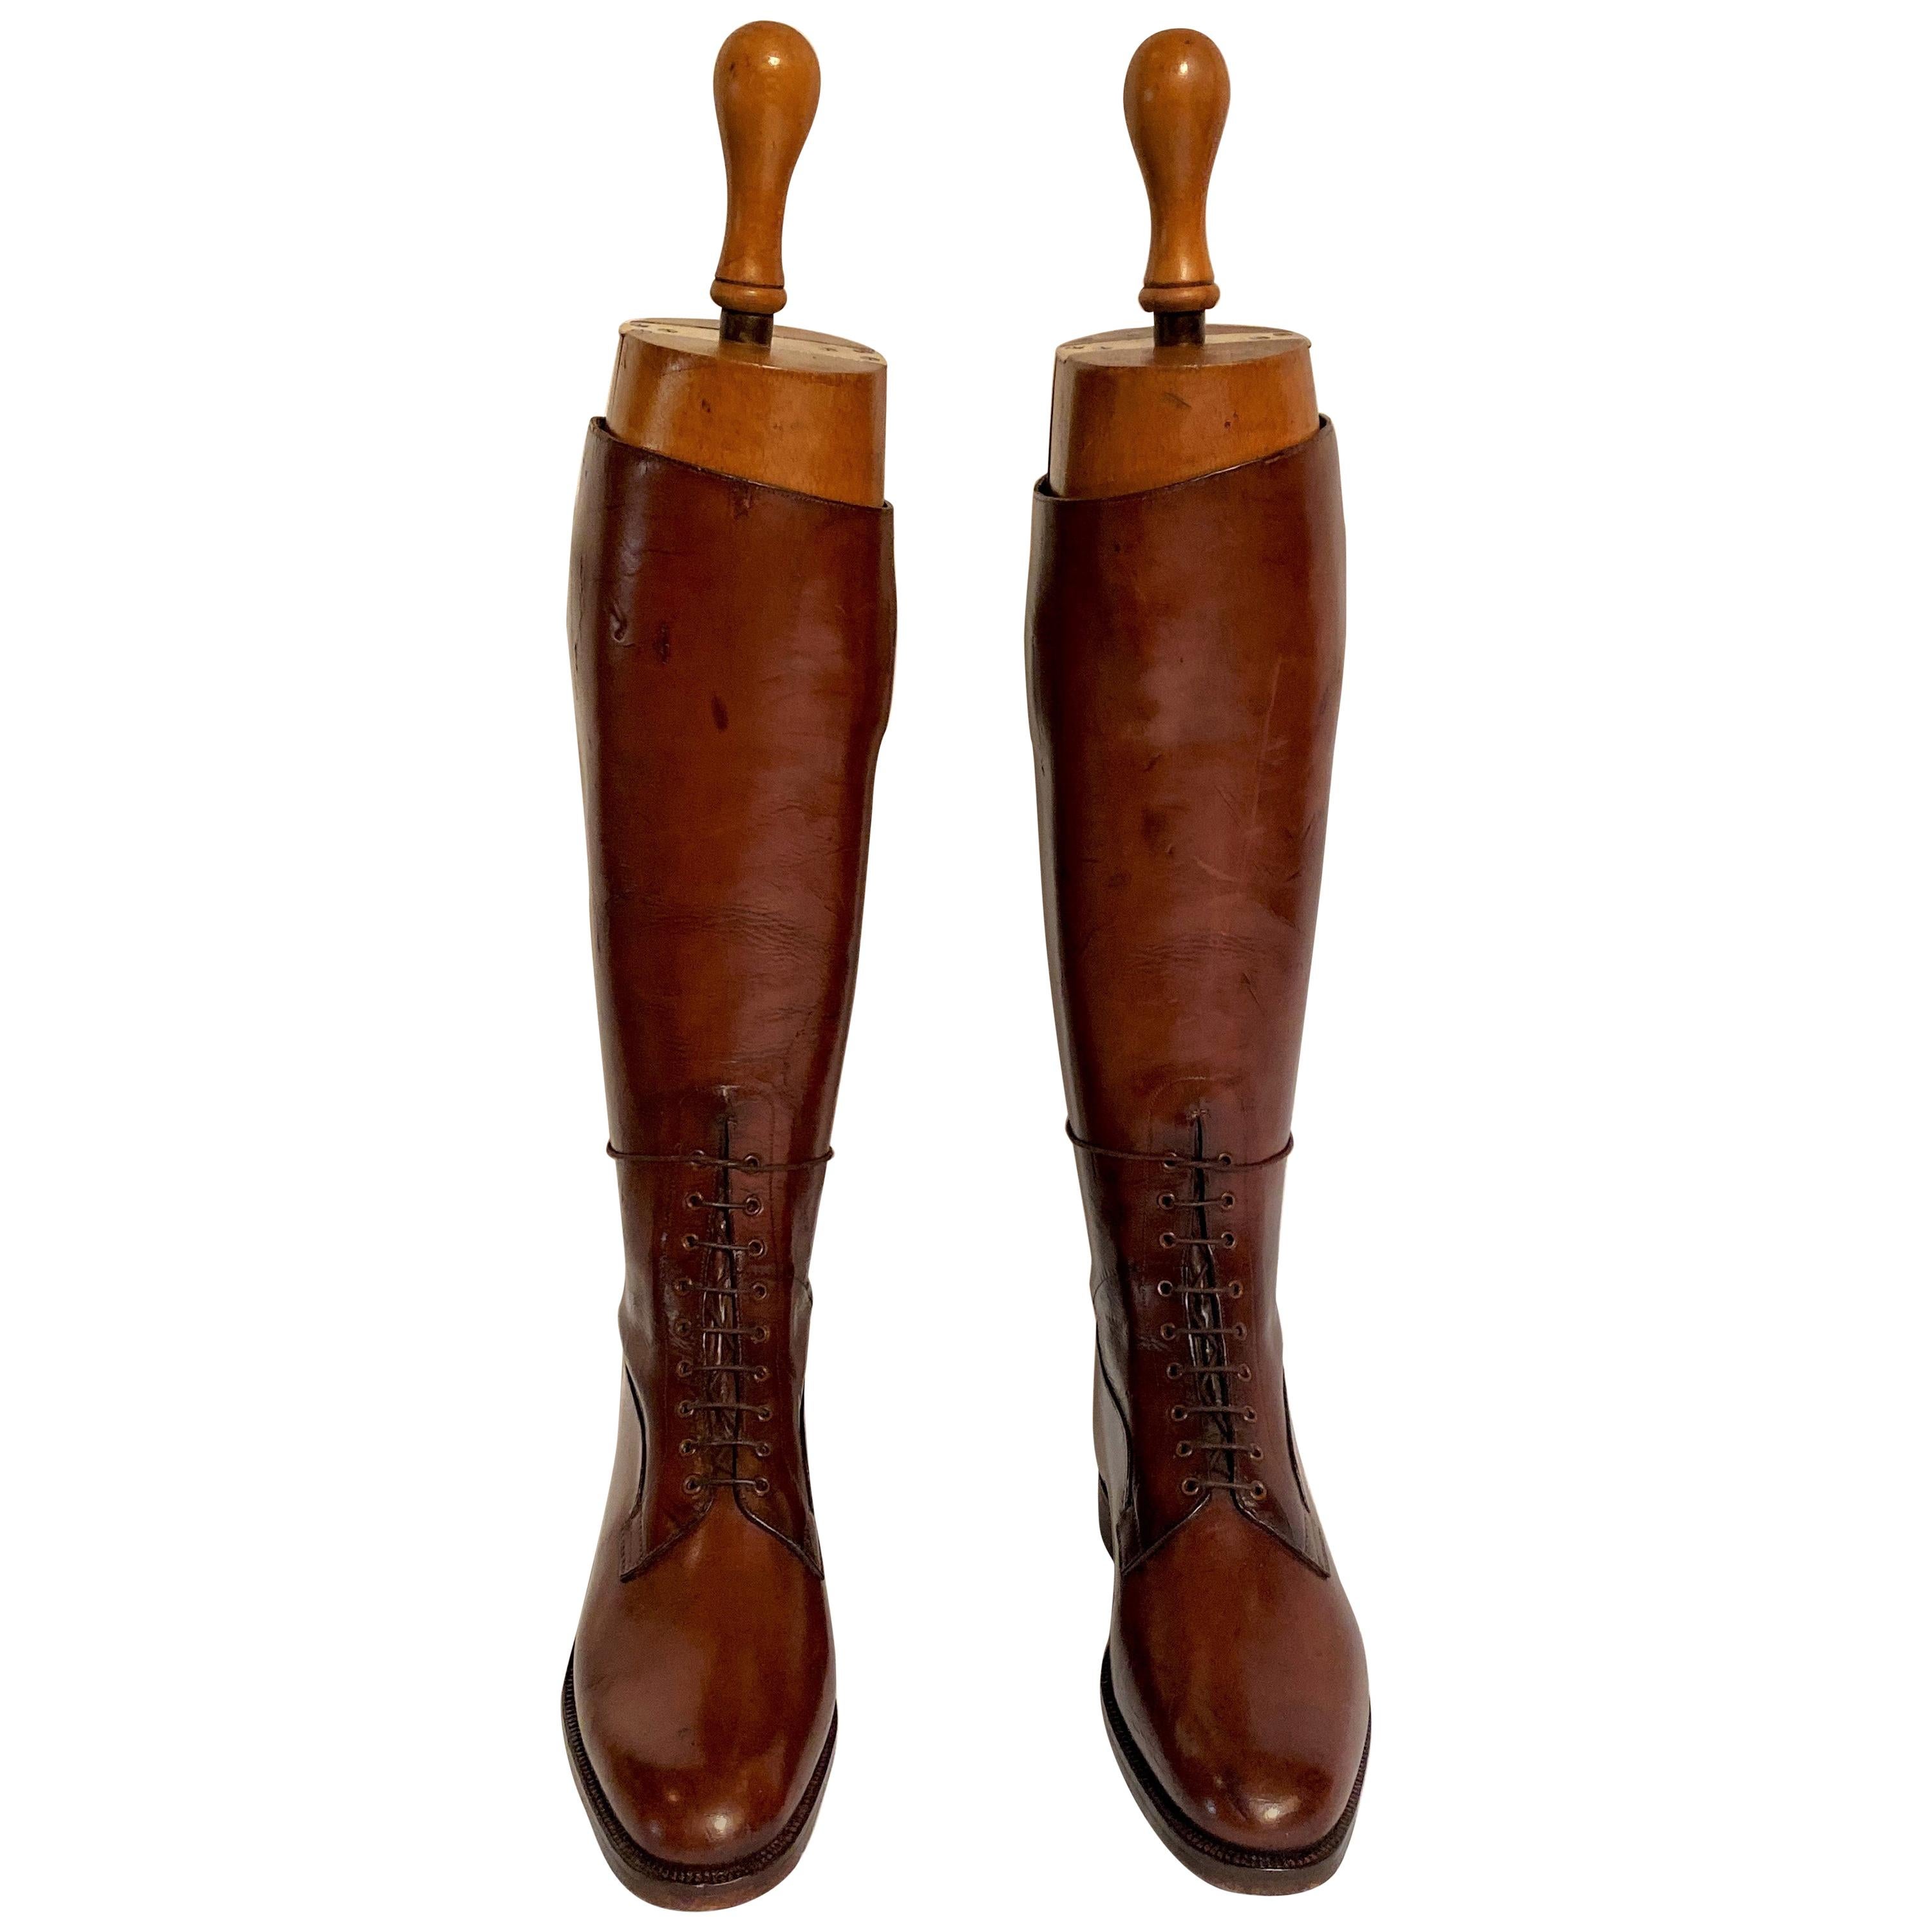 Pair of Antique British "Bespoke" Pristine Leather Field Boots, circa 1930s